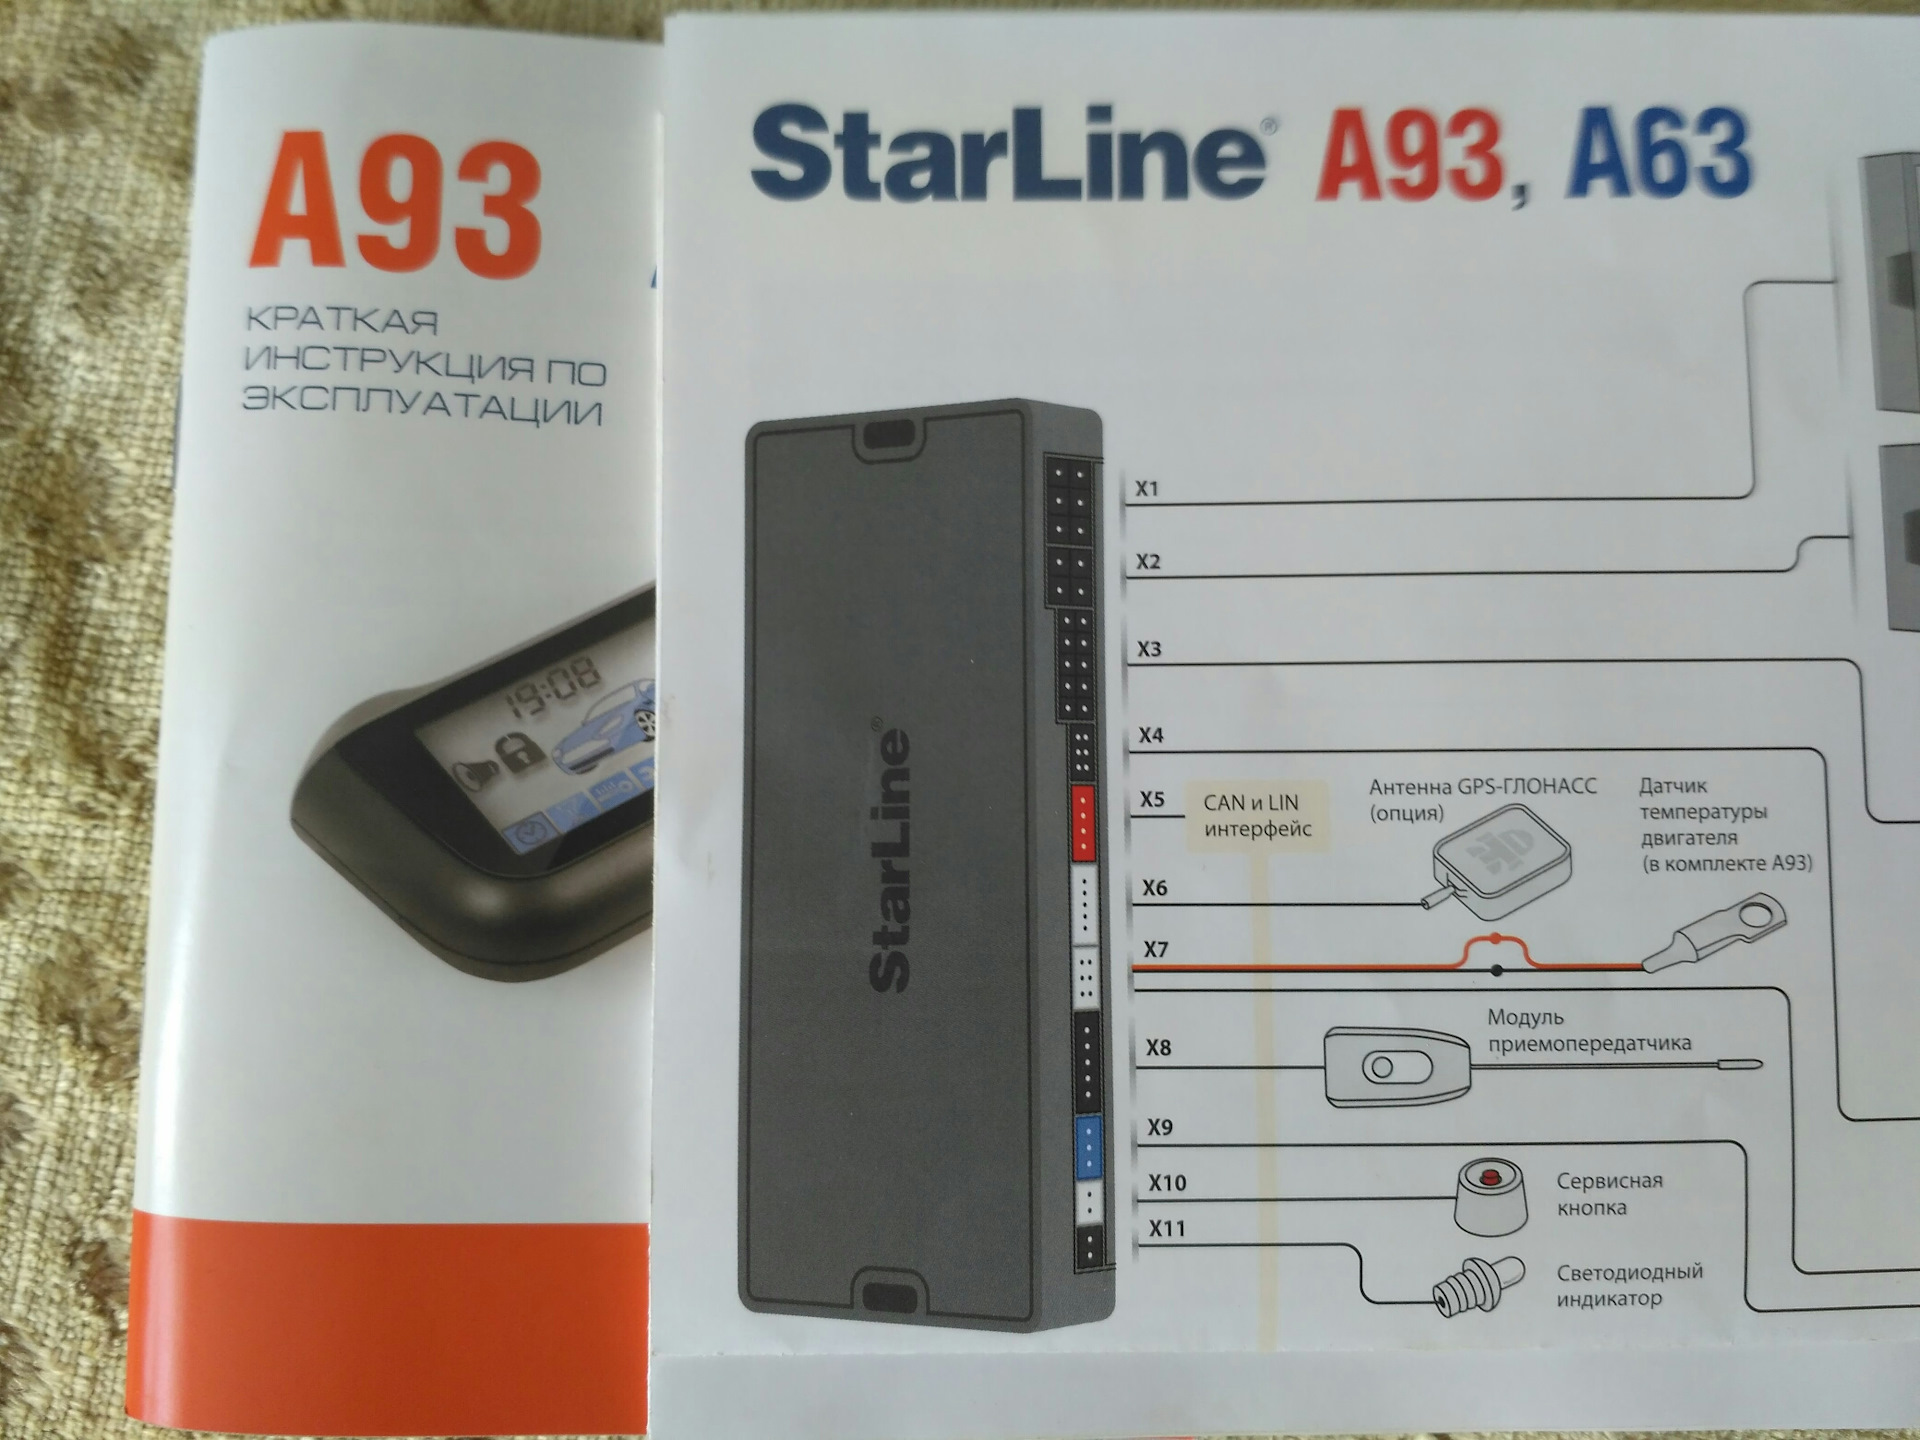 Купить модуль старлайн а93. GPS модуль для STARLINE a93. Блок сигнализации старлайн а93. ГСМ модуль старлайн а93. GPS блок старлайн а93.